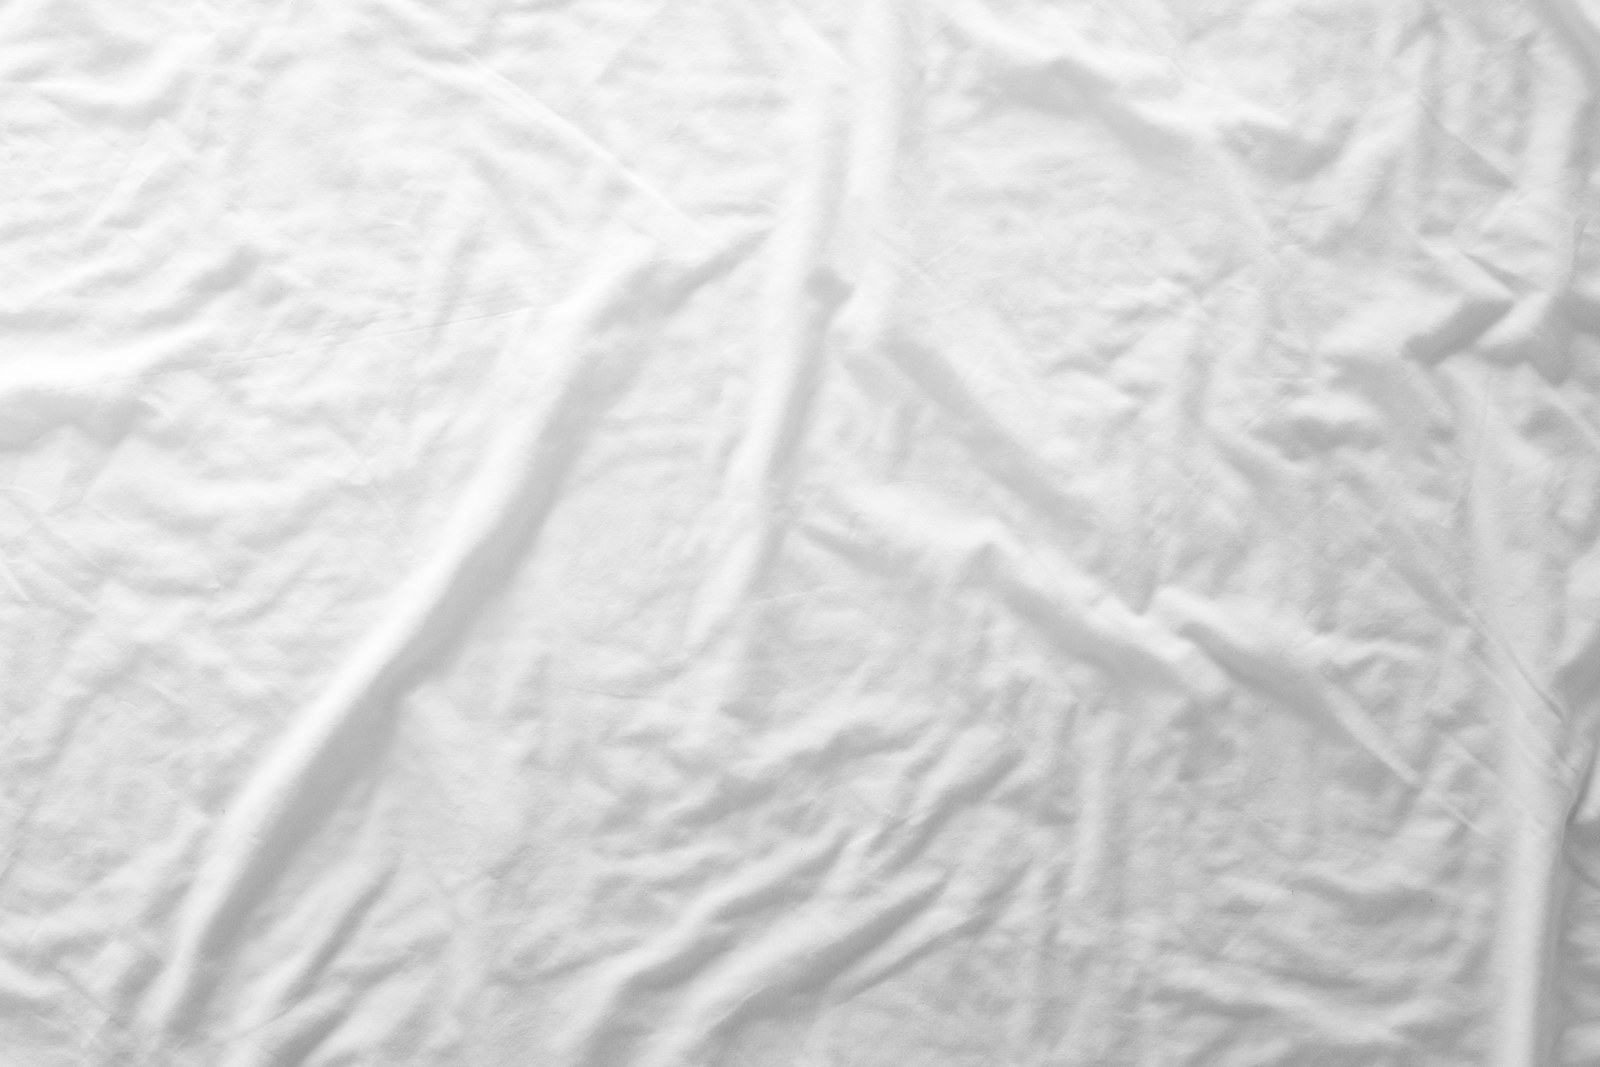 Woman cumming white sheets